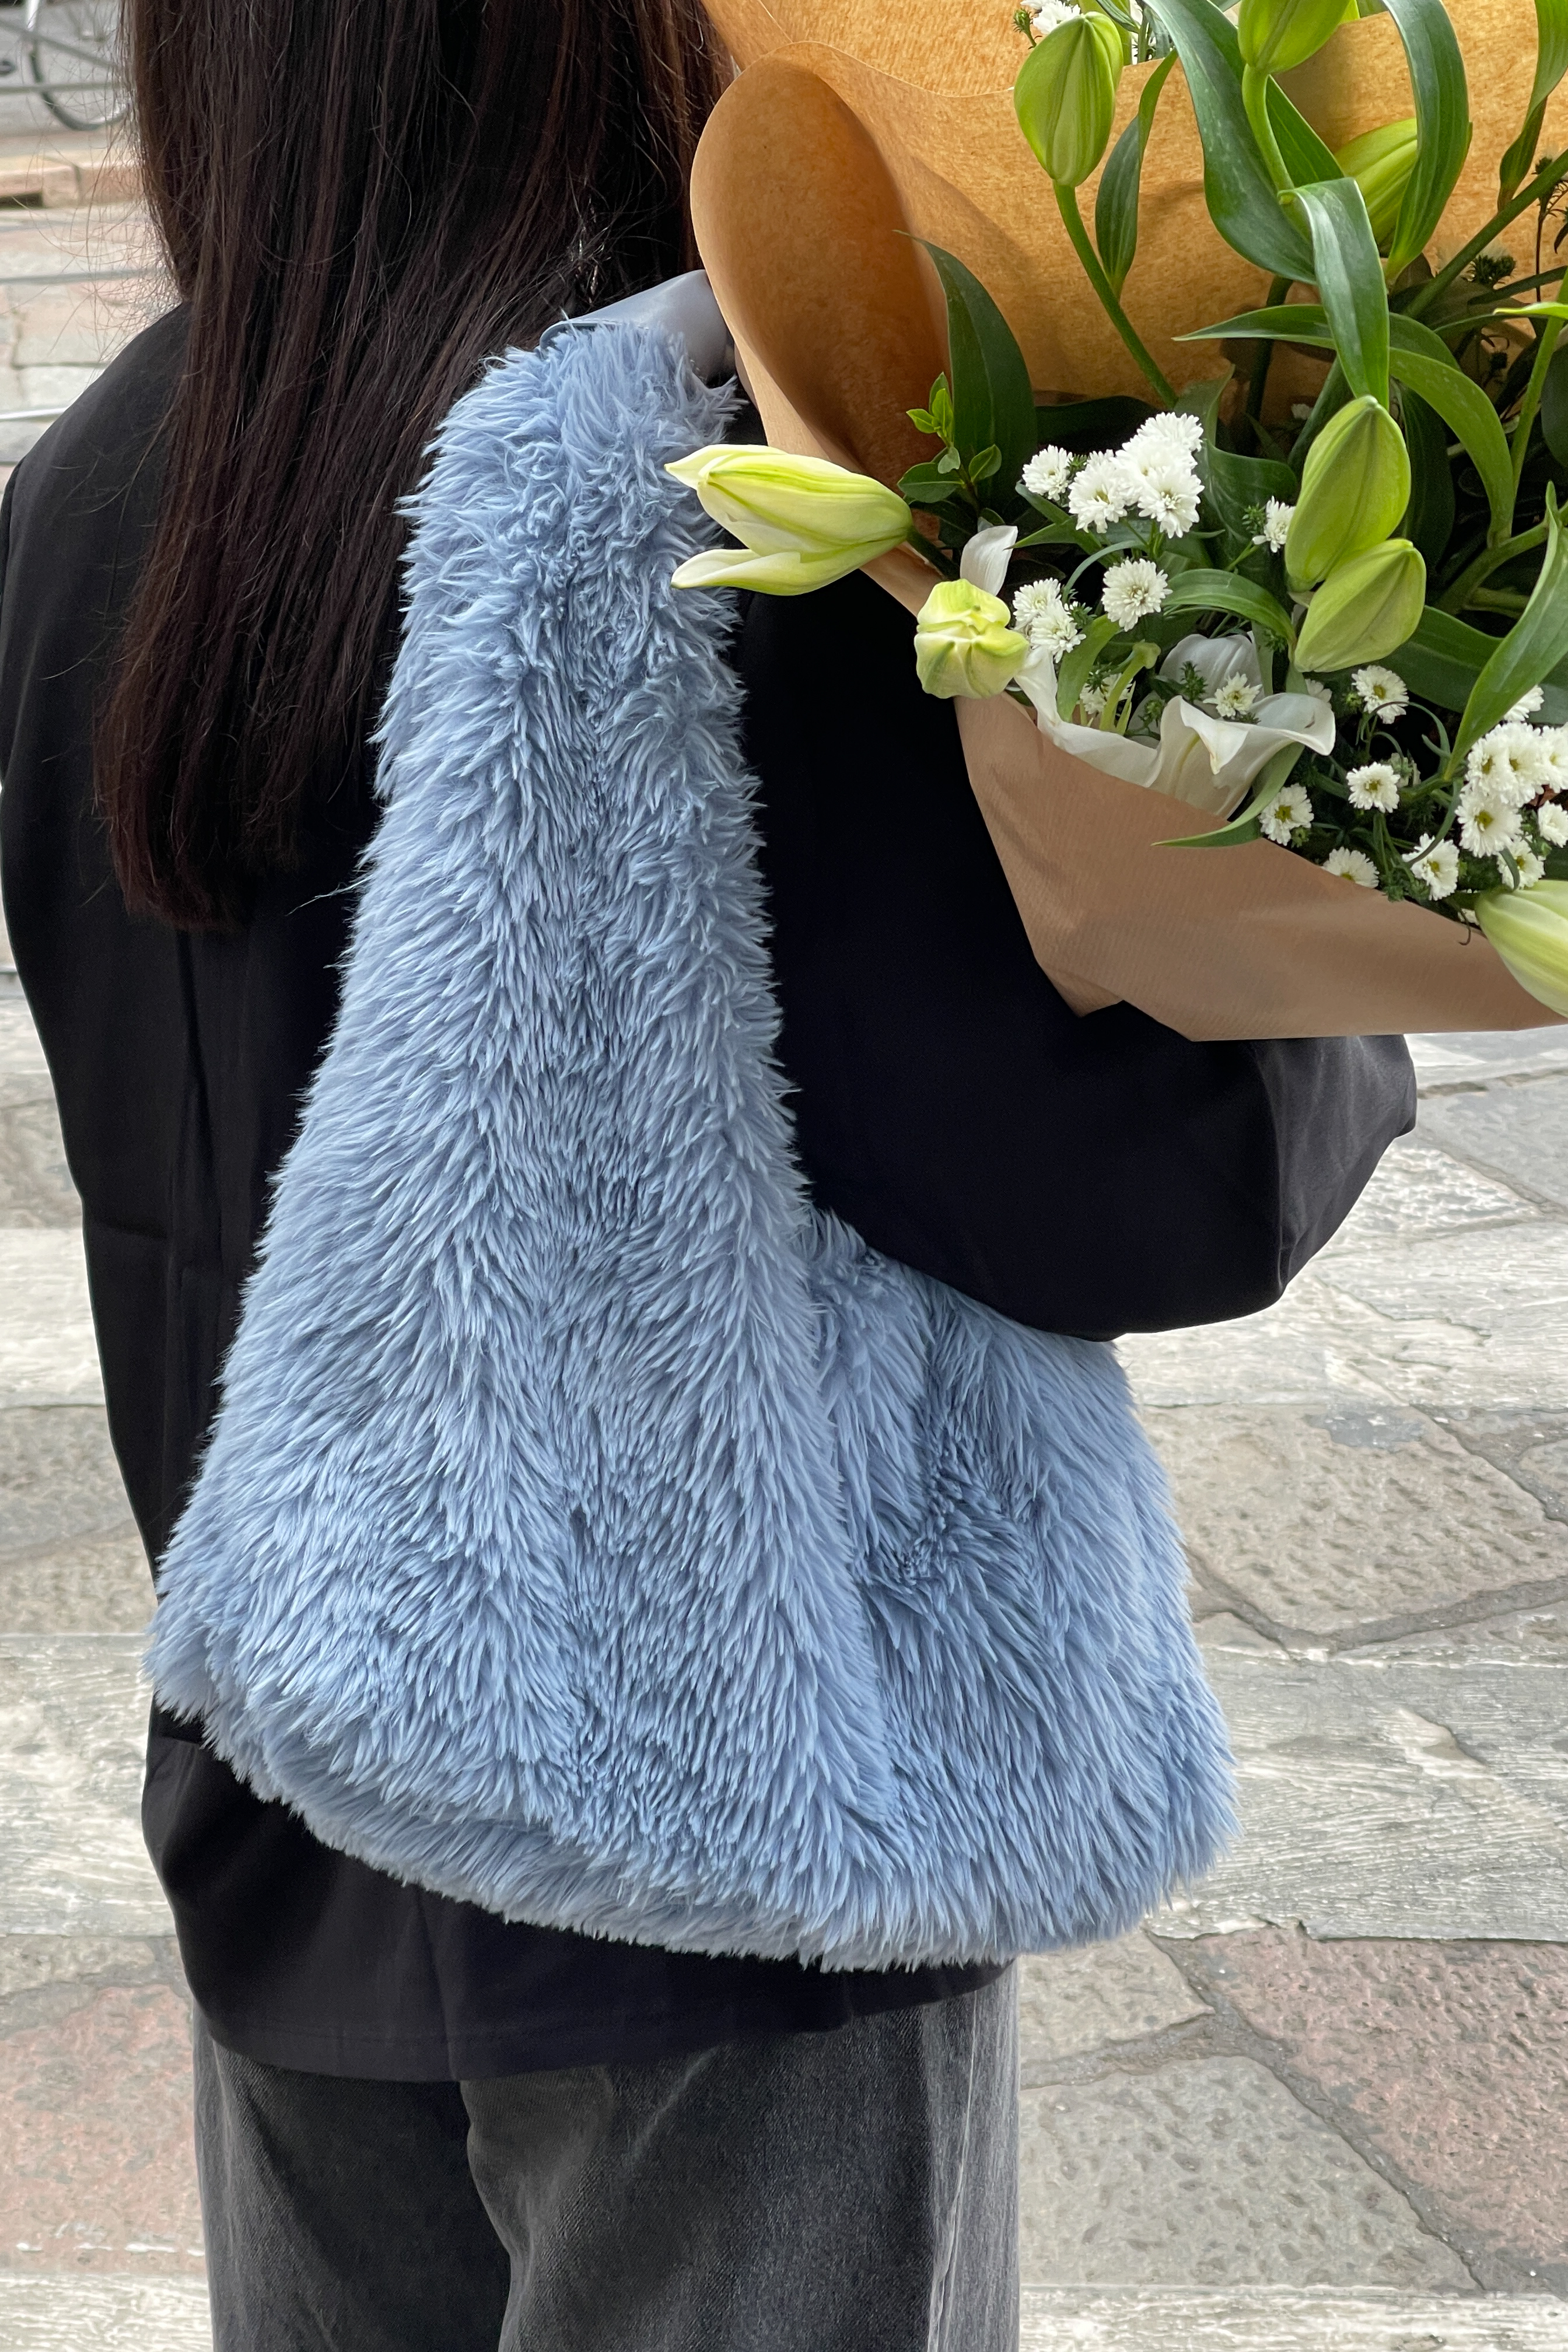 Blue Puszysta torba ze sztucznego futra